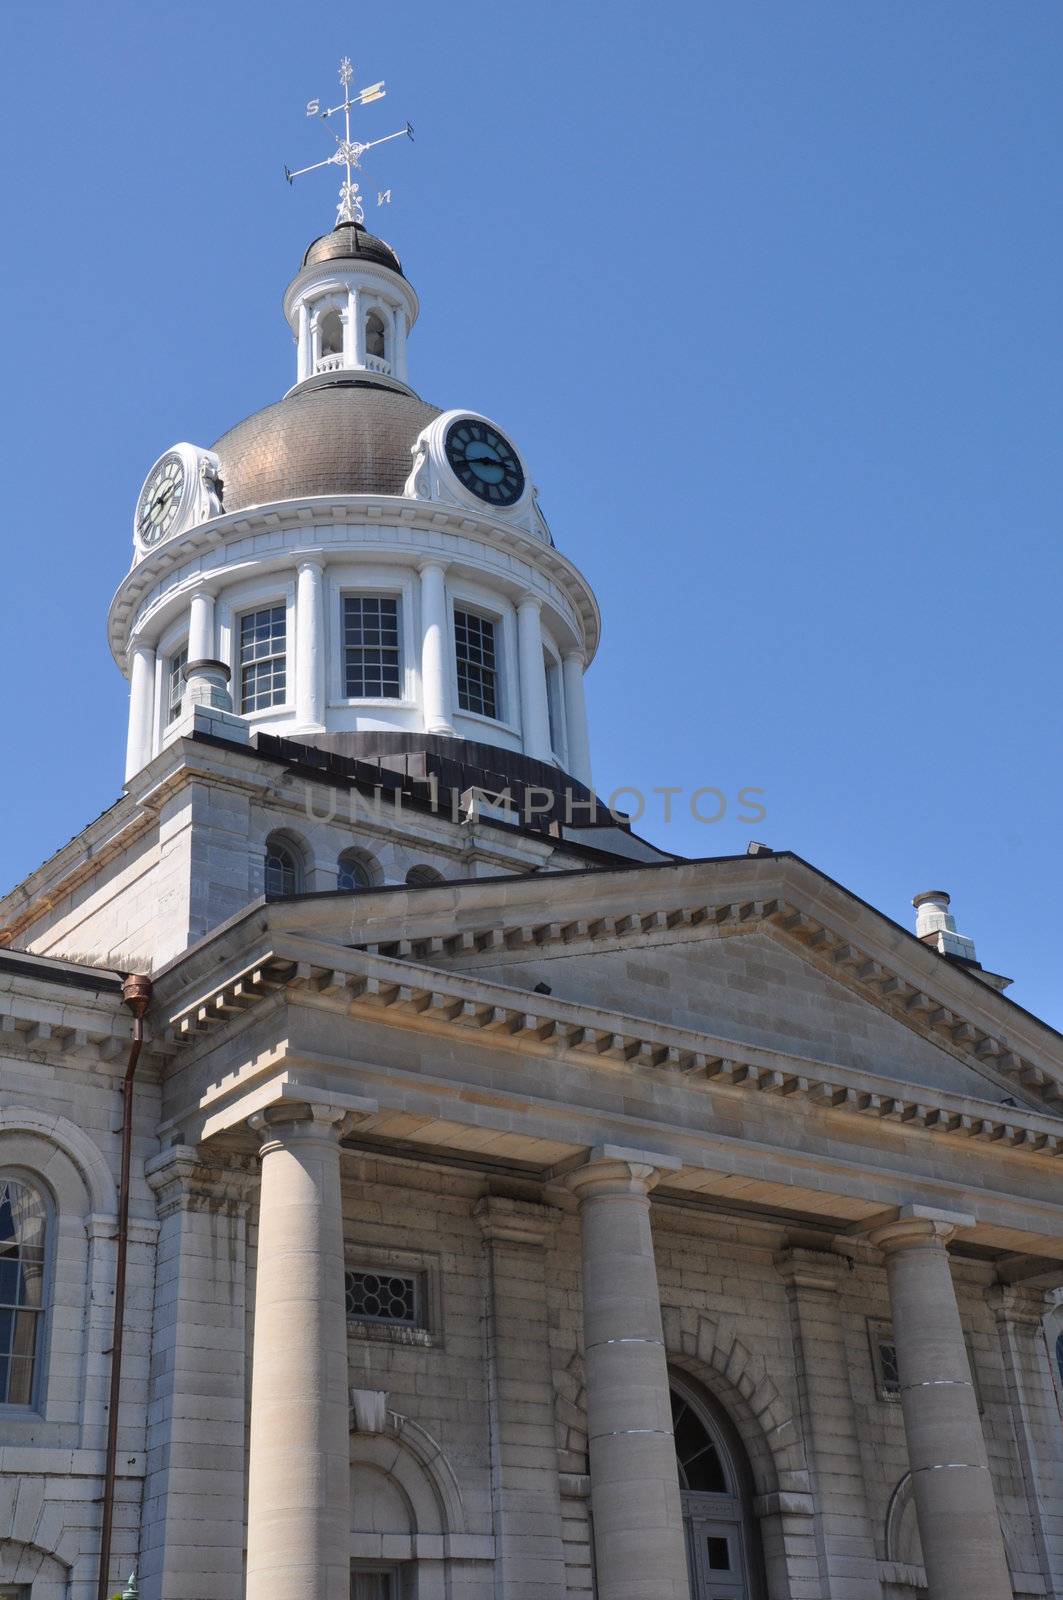 Kingston City Hall in Ontario, Canada